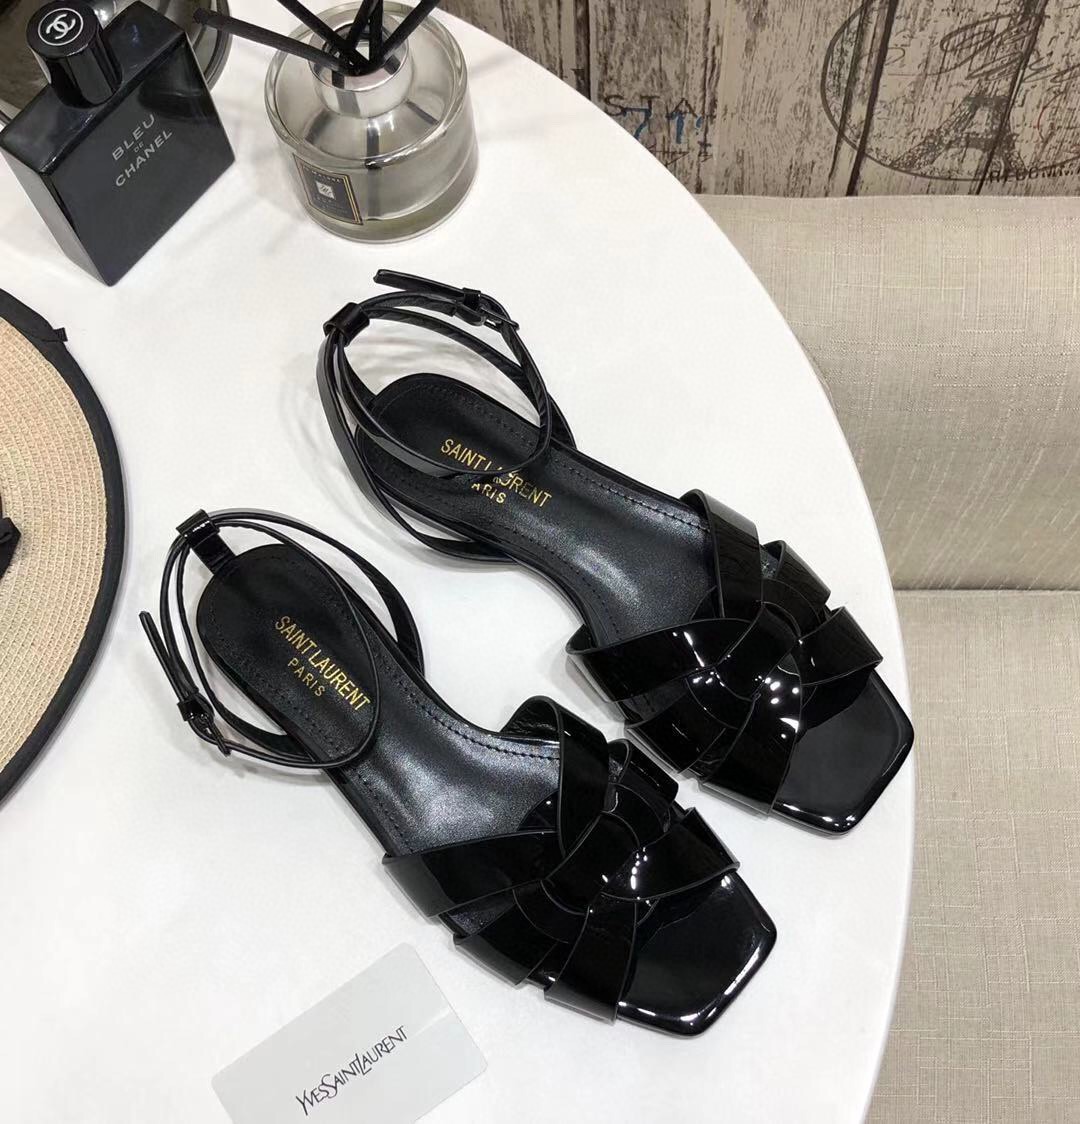 2021 Cheap Saint Laurent tribute flat sandals in patent leather black